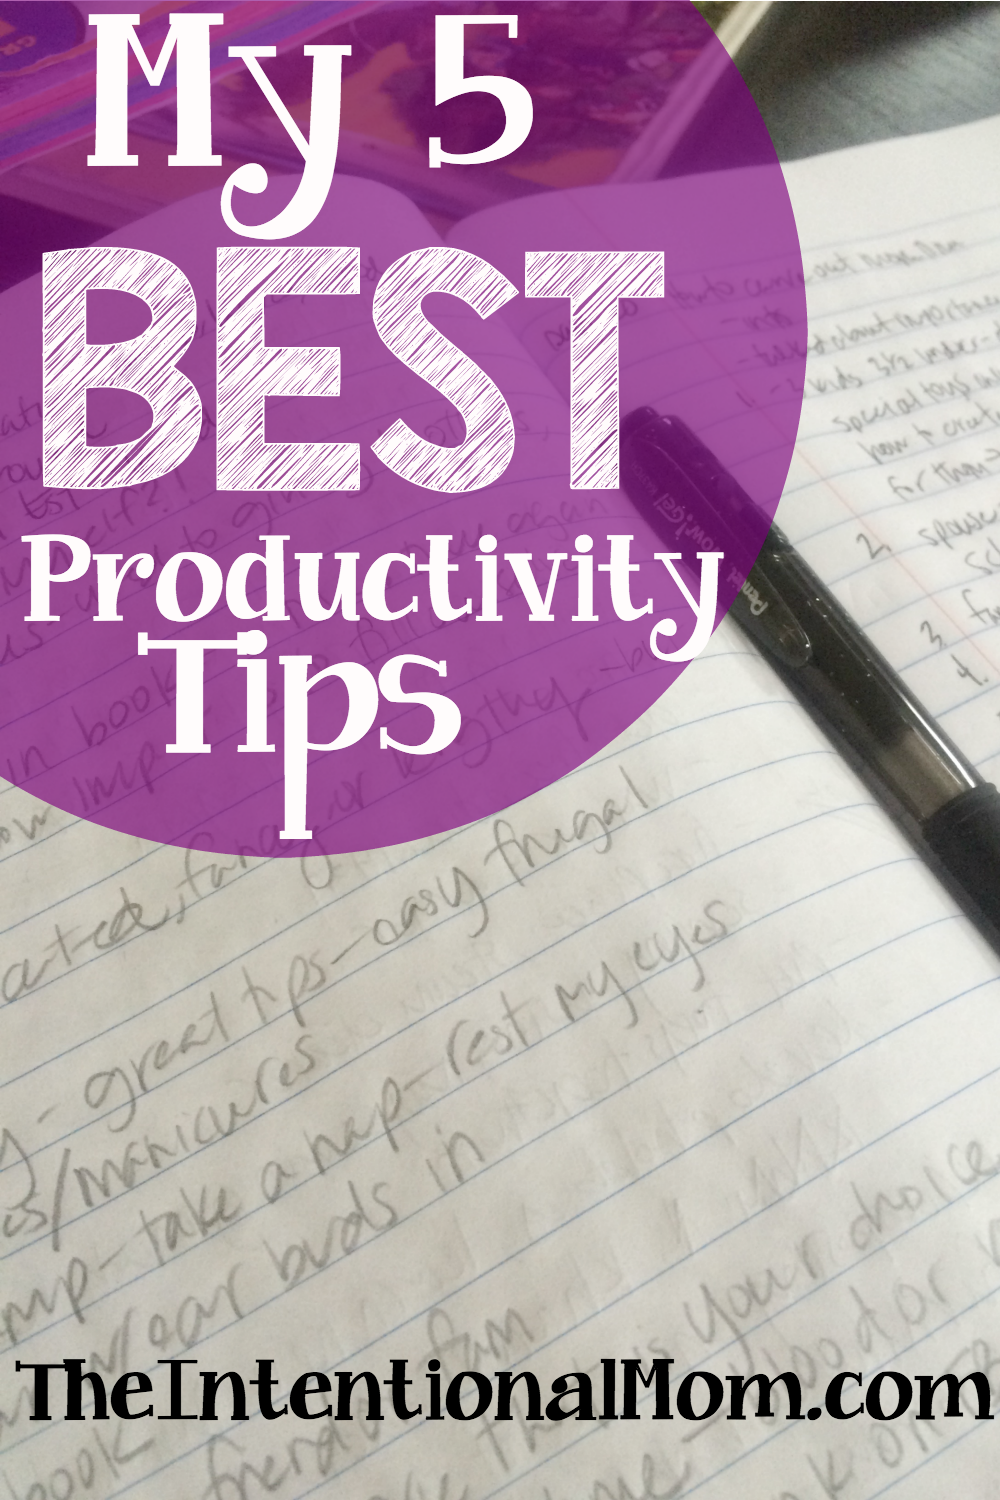 My 5 Best Productivity Tips